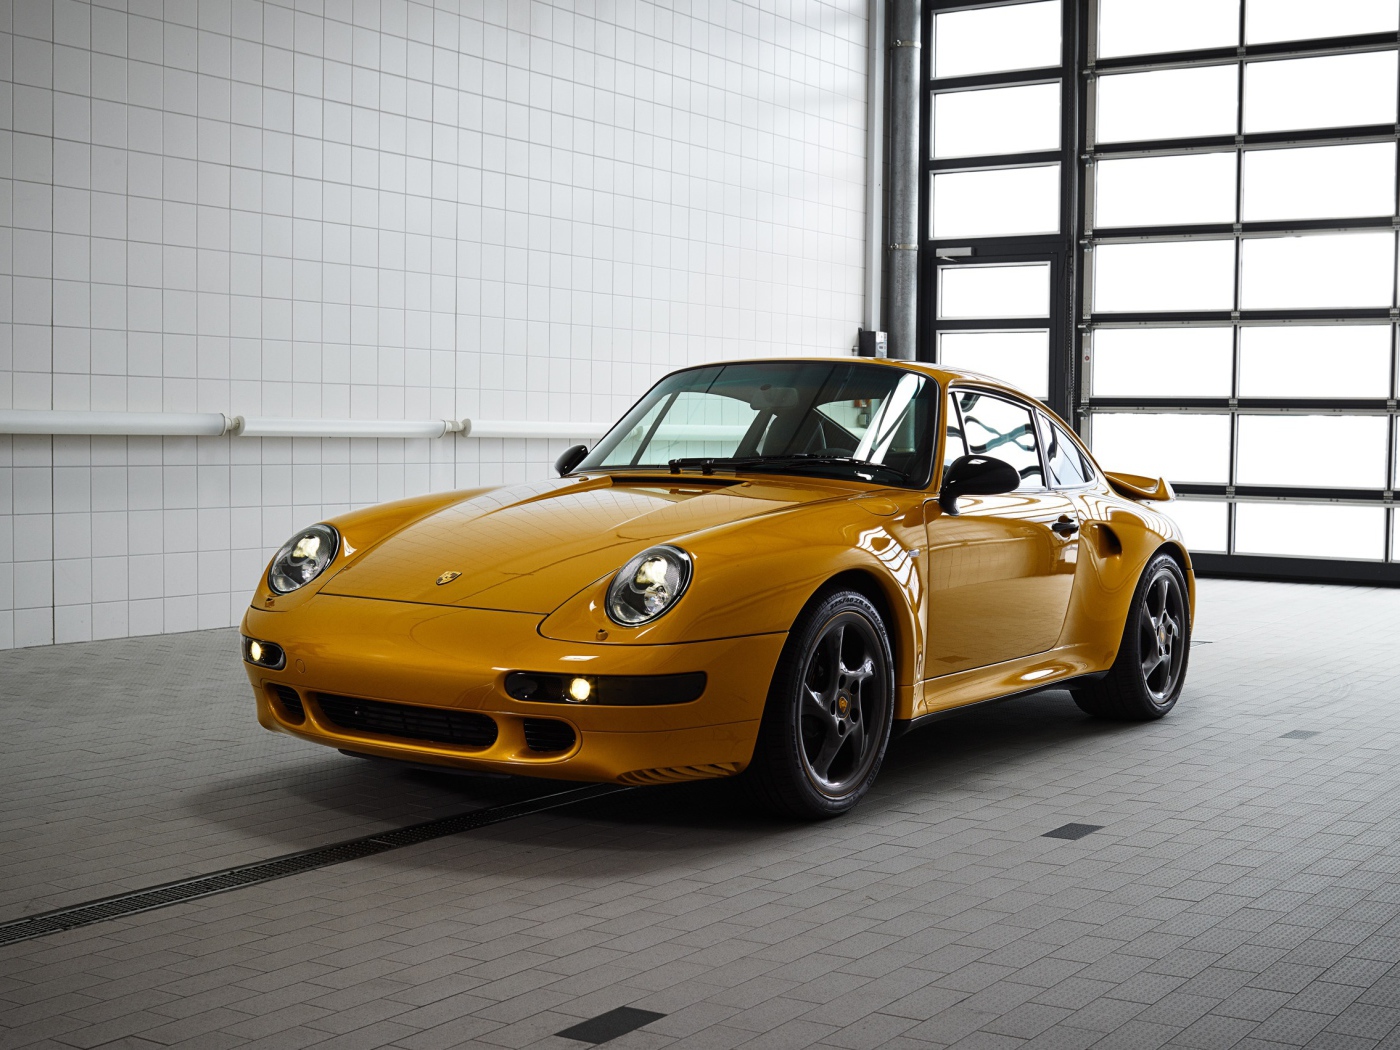 Yellow Porsche 911 Turbo Classic Series, 2018 in the garage